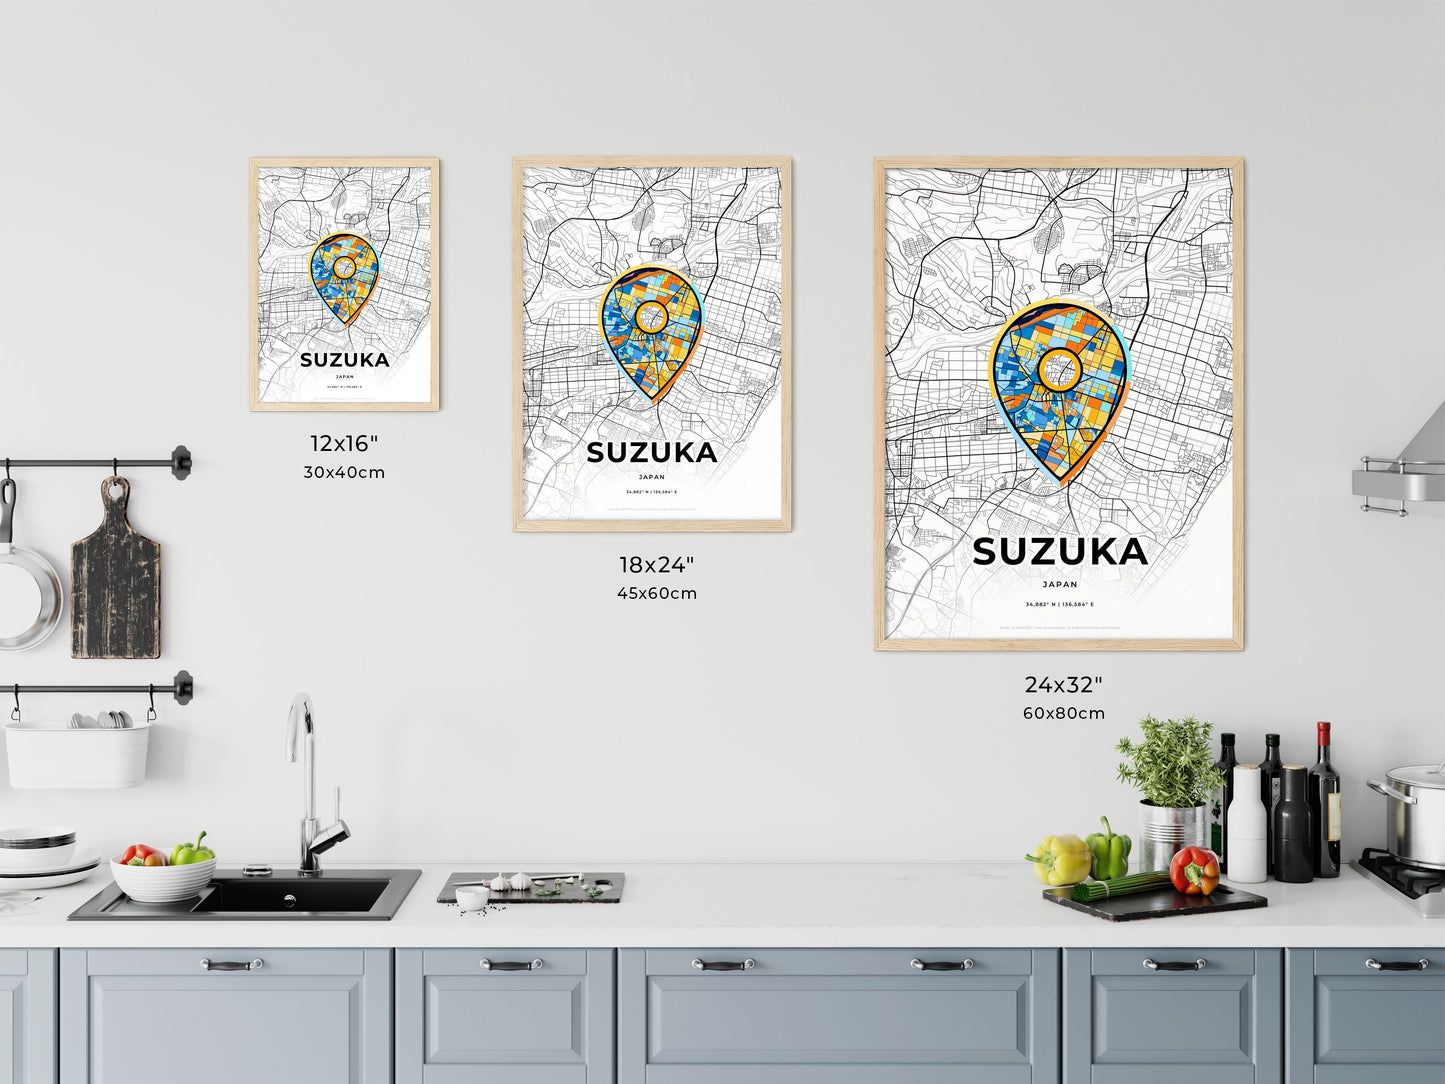 SUZUKA JAPAN minimal art map with a colorful icon.